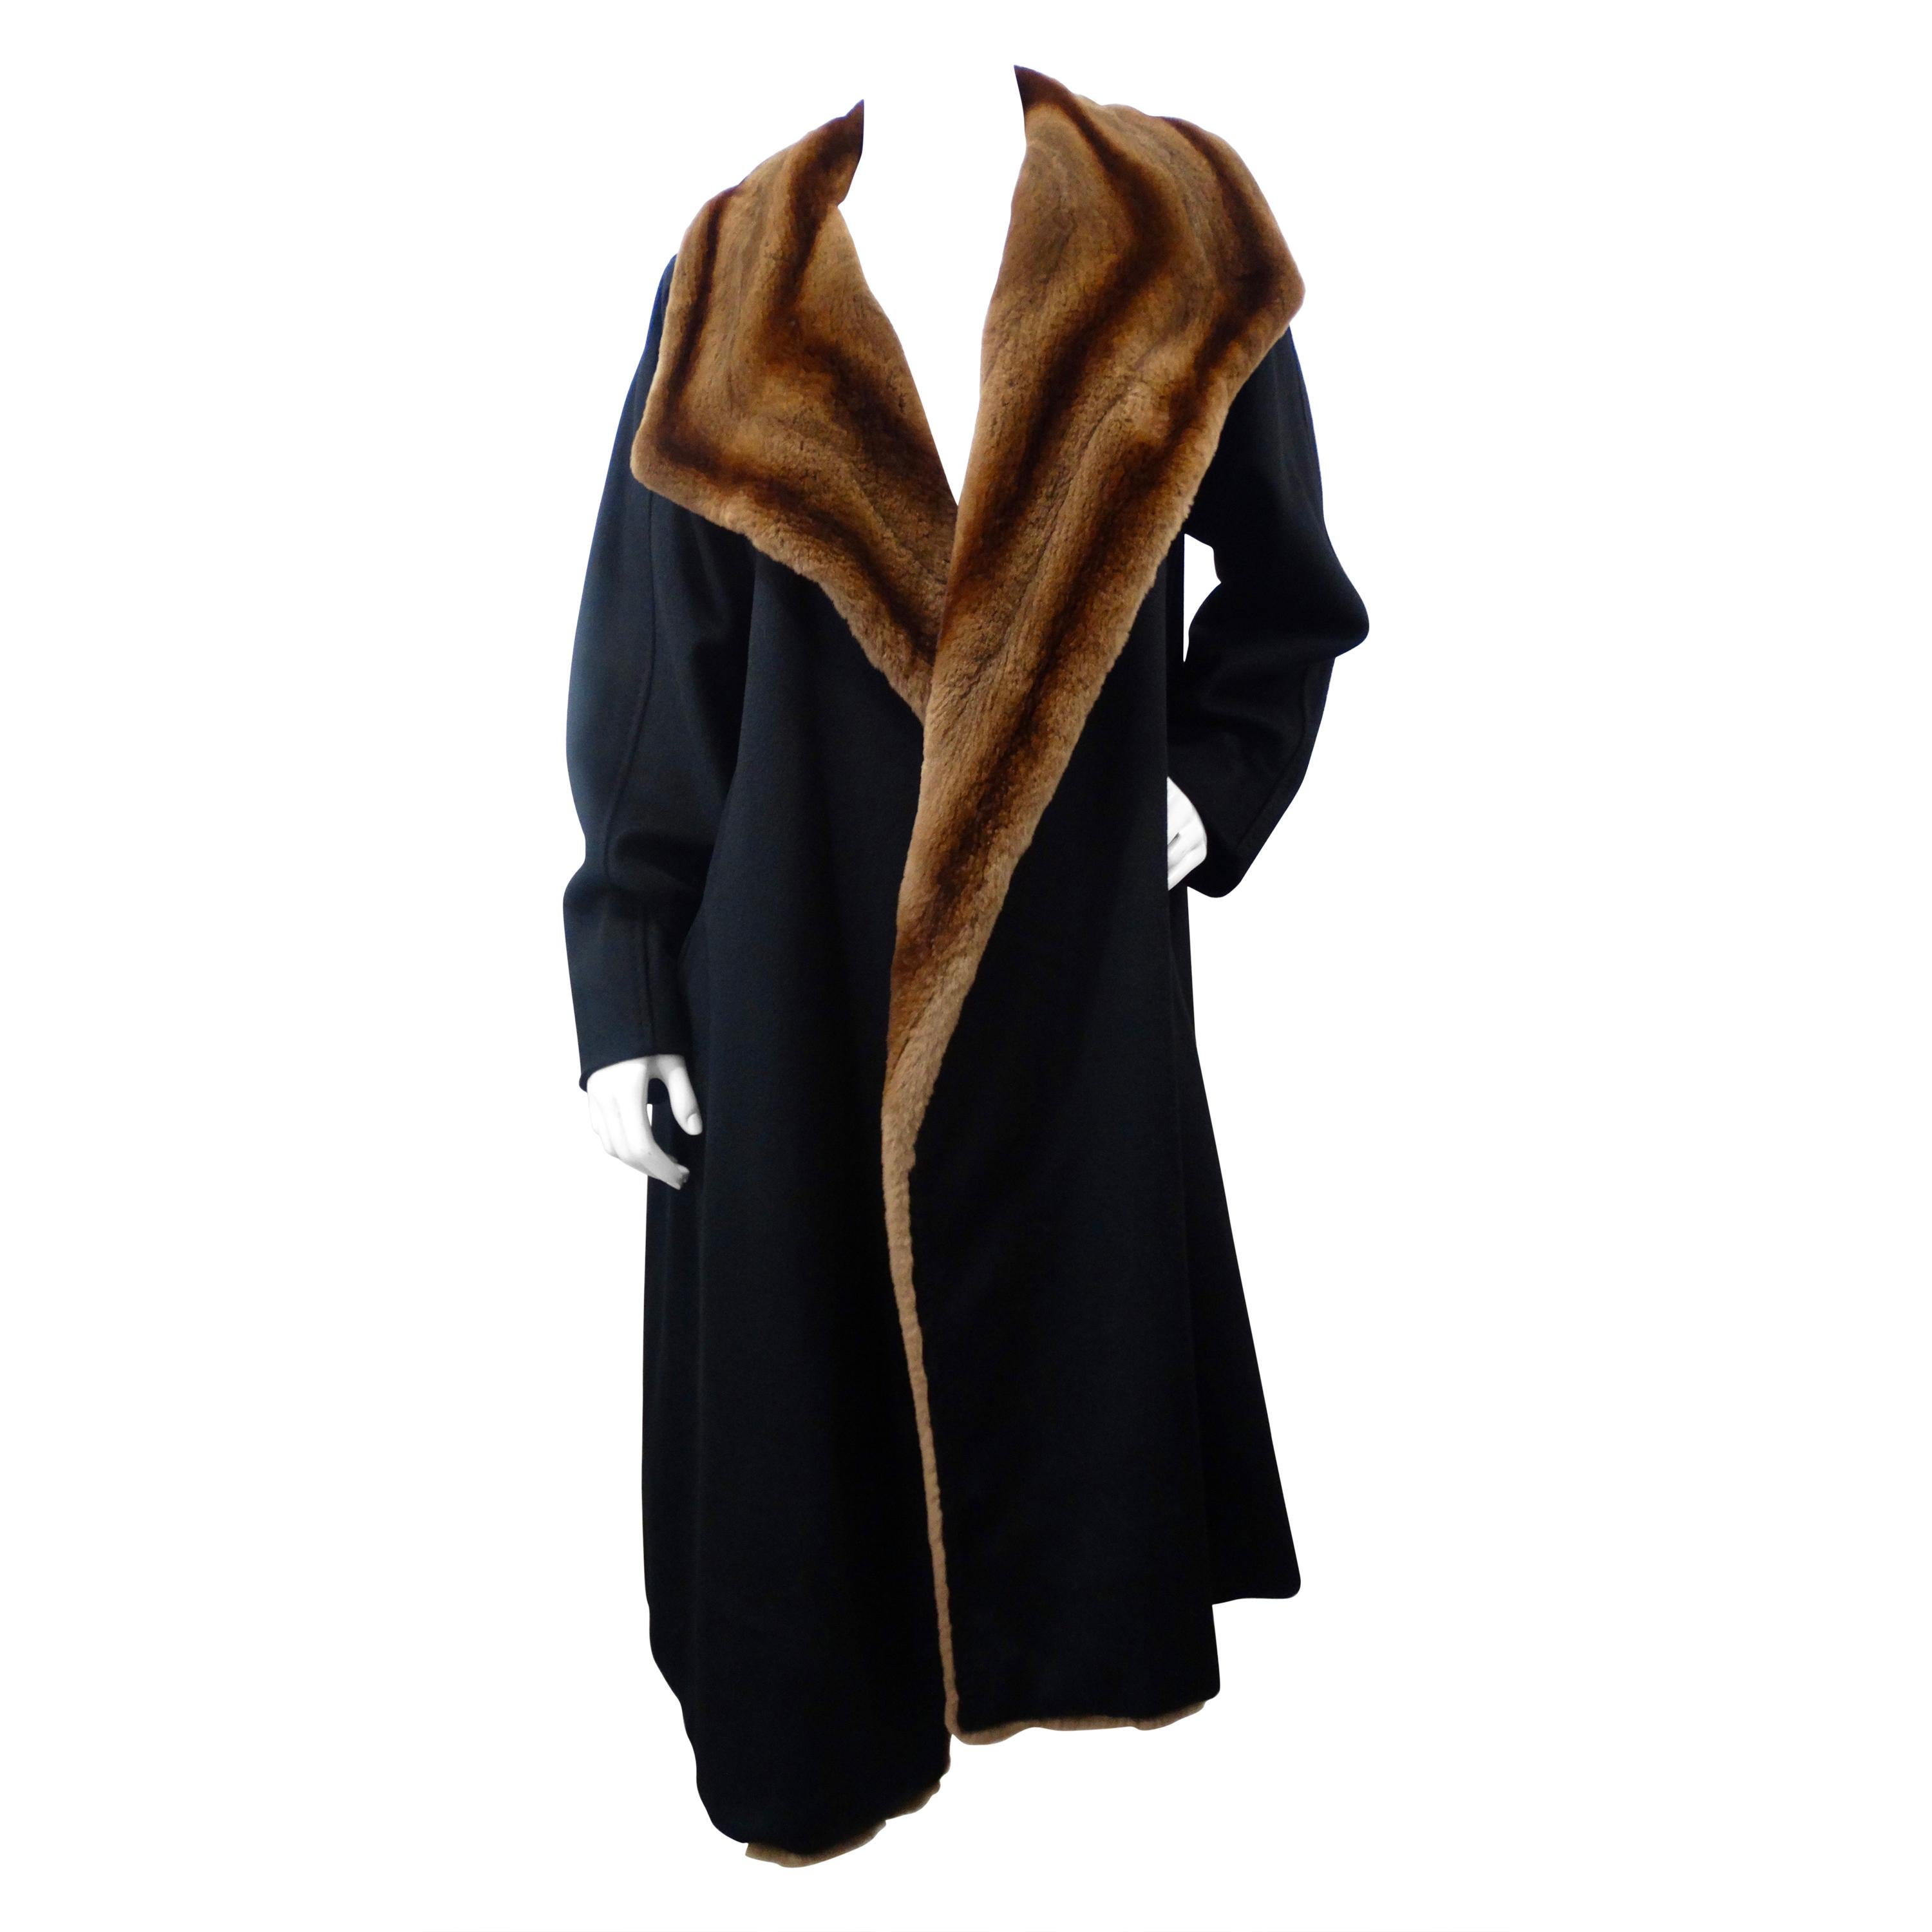  MaxMara Late 20th Century Black Cashmere & Mink Fur Coat 